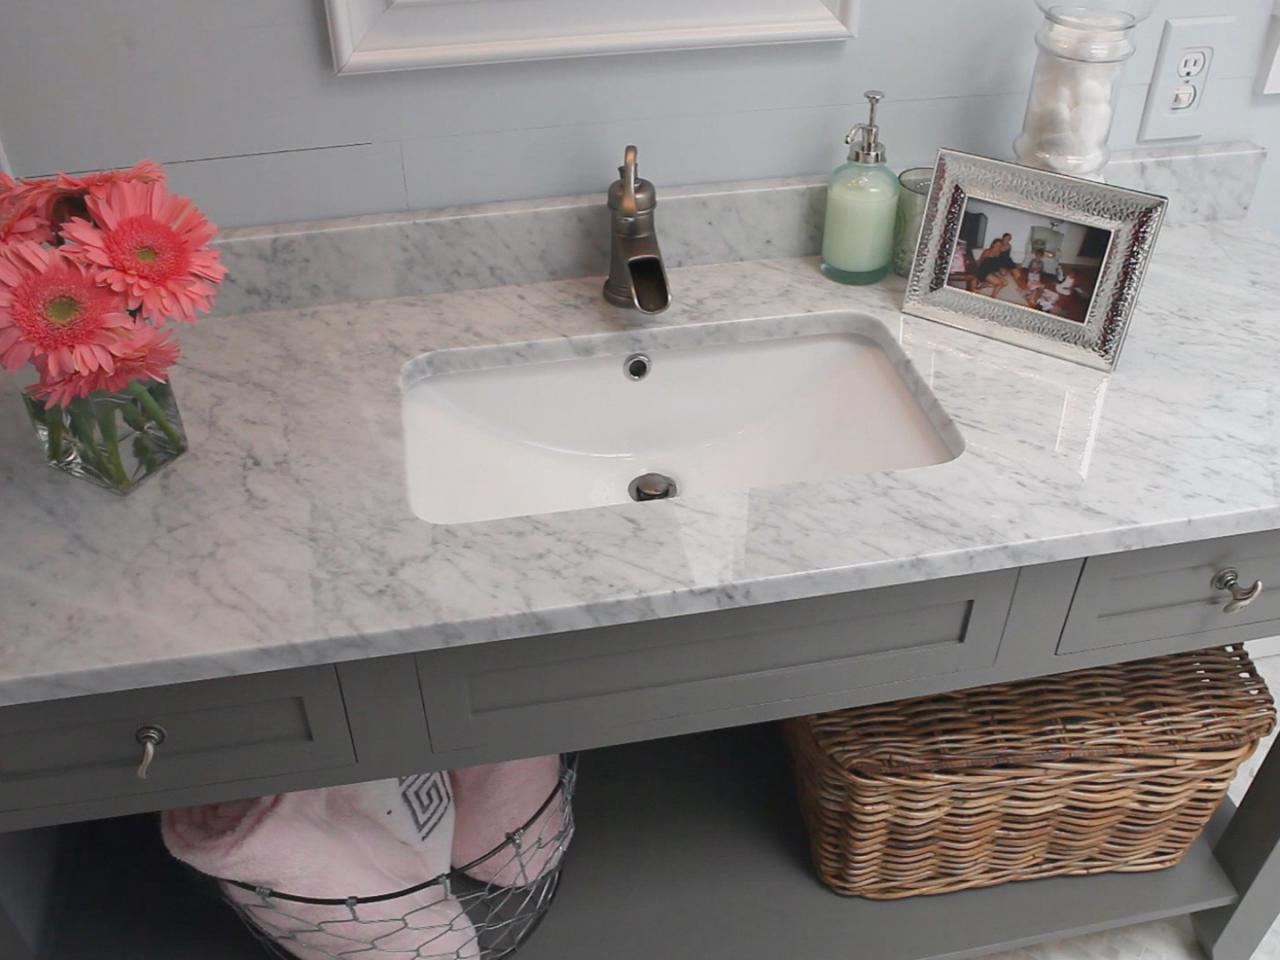 Marble Bathroom Vanity Springfield Va